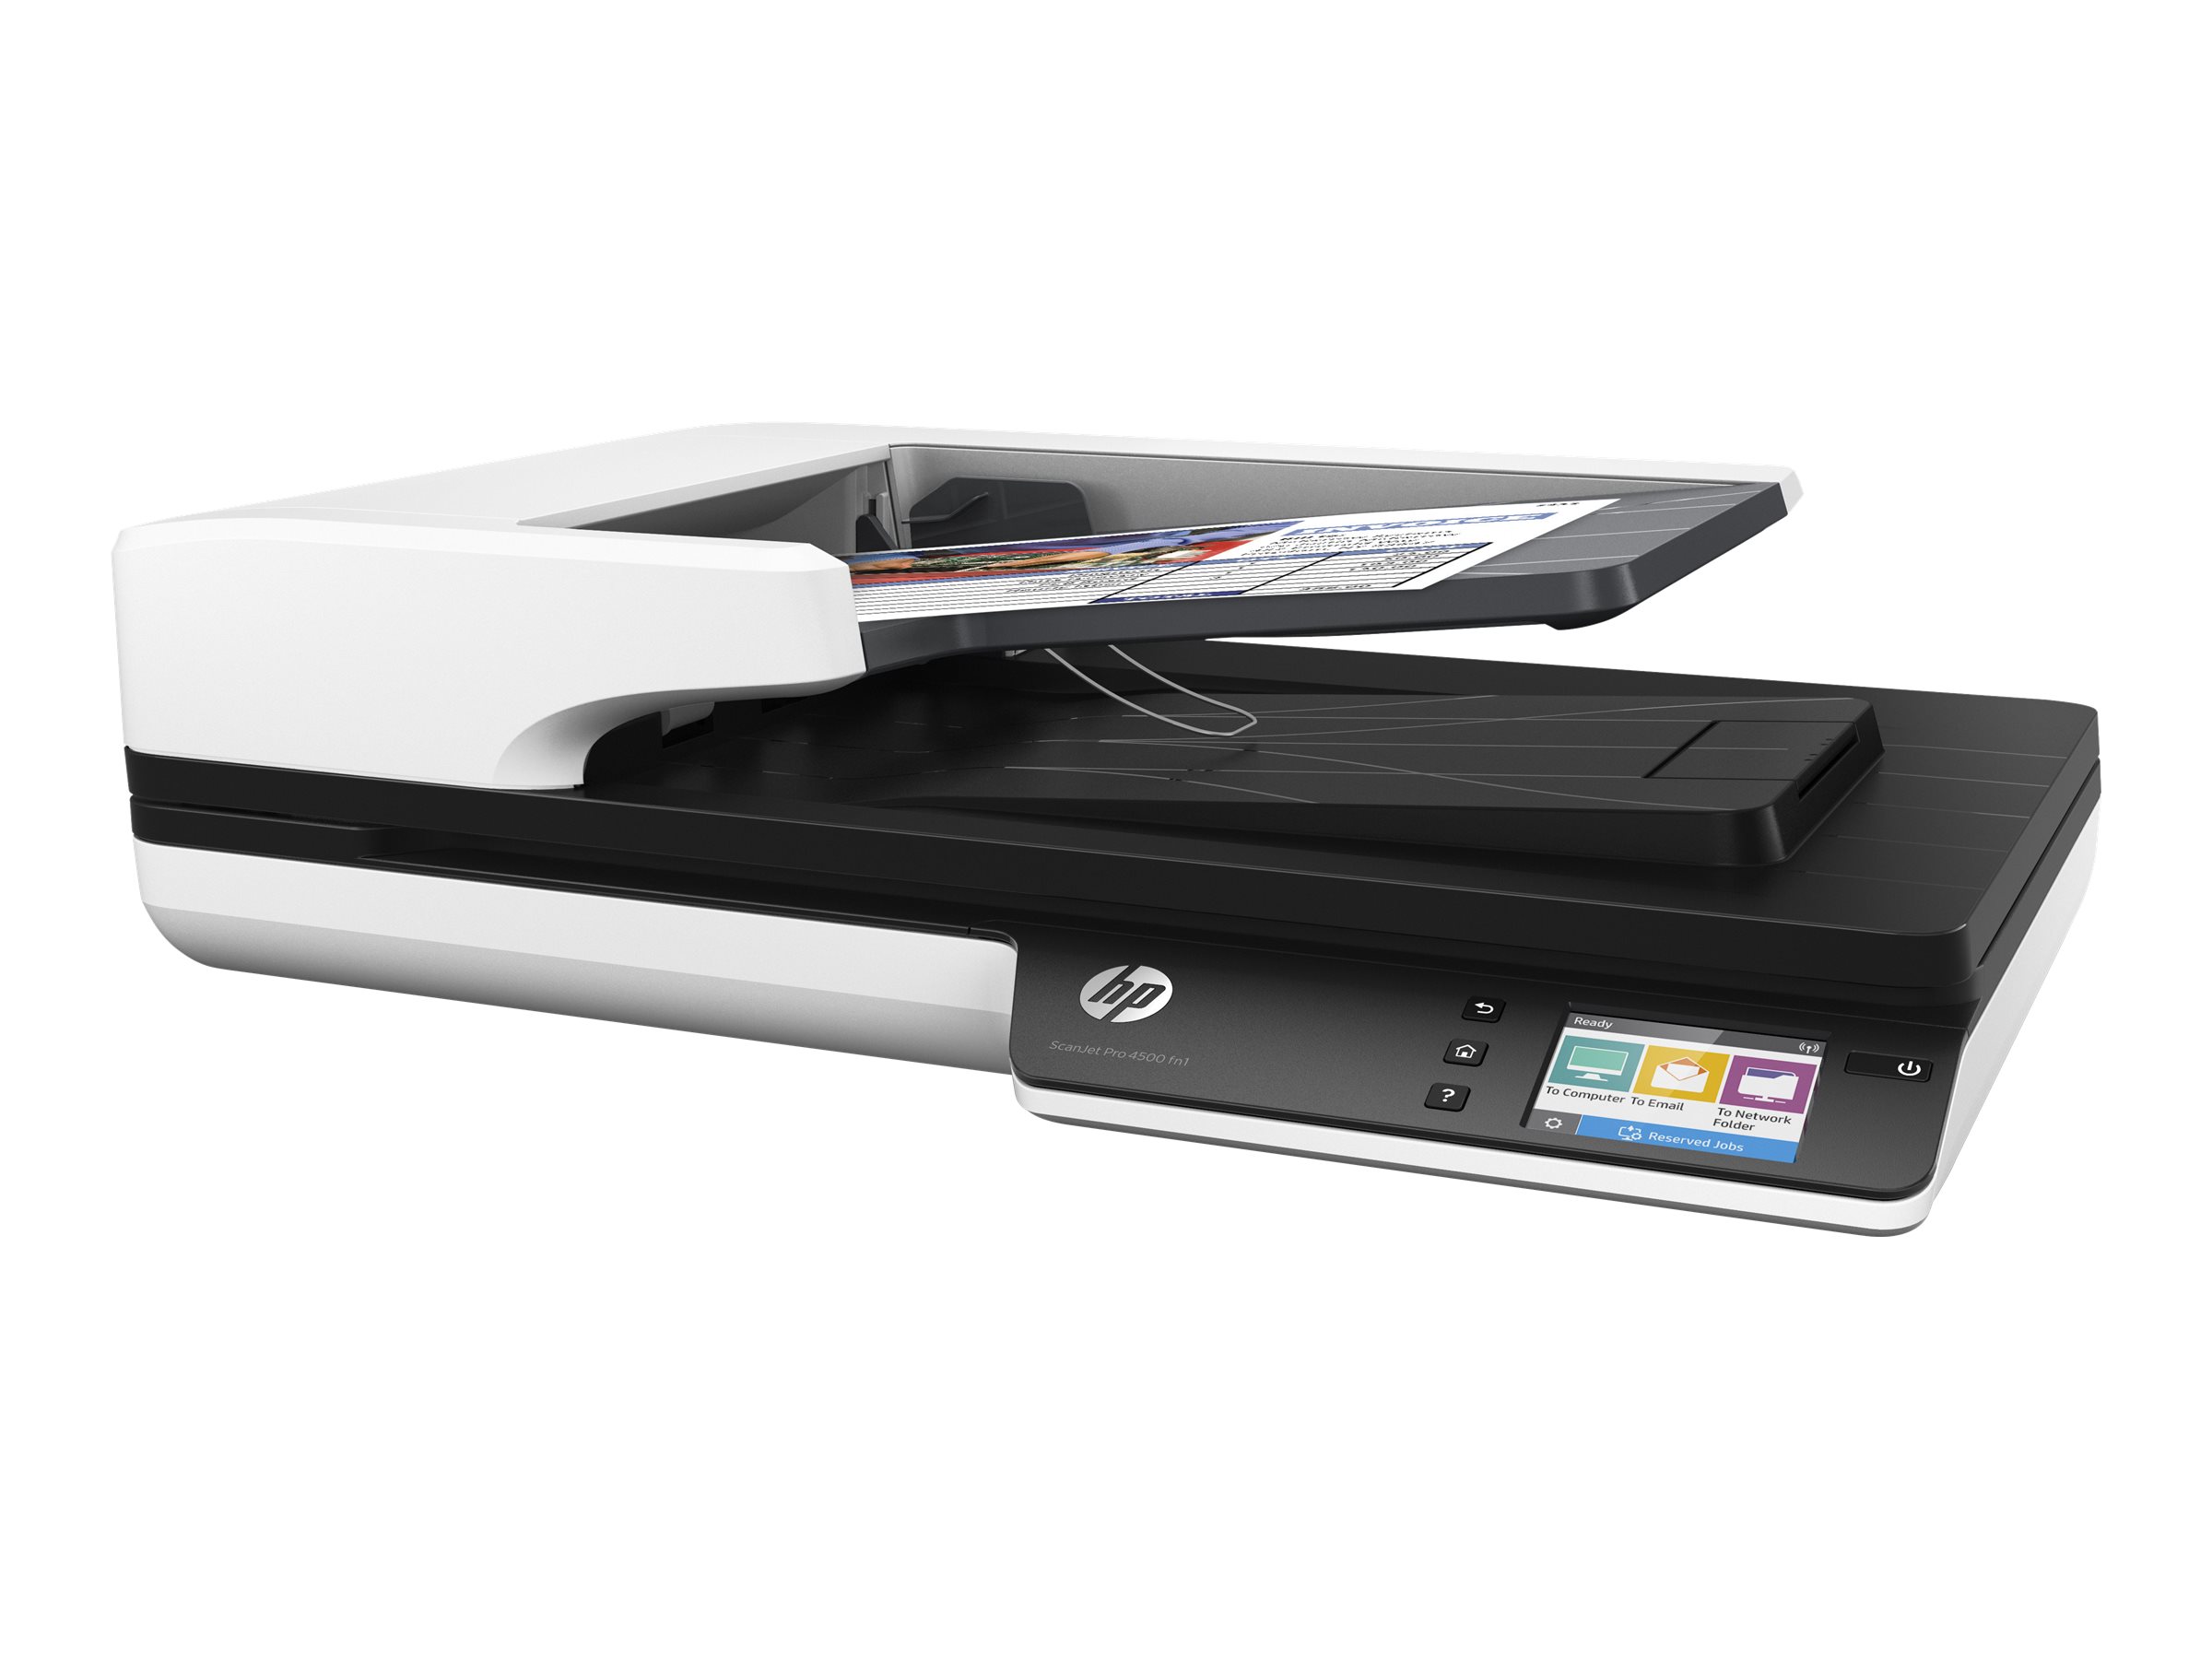 HP Scanjet Pro 4500 fn1 - Dokumentenscanner - CMOS / CIS - Duplex - A4/Letter - 1200 dpi x 1200 dpi